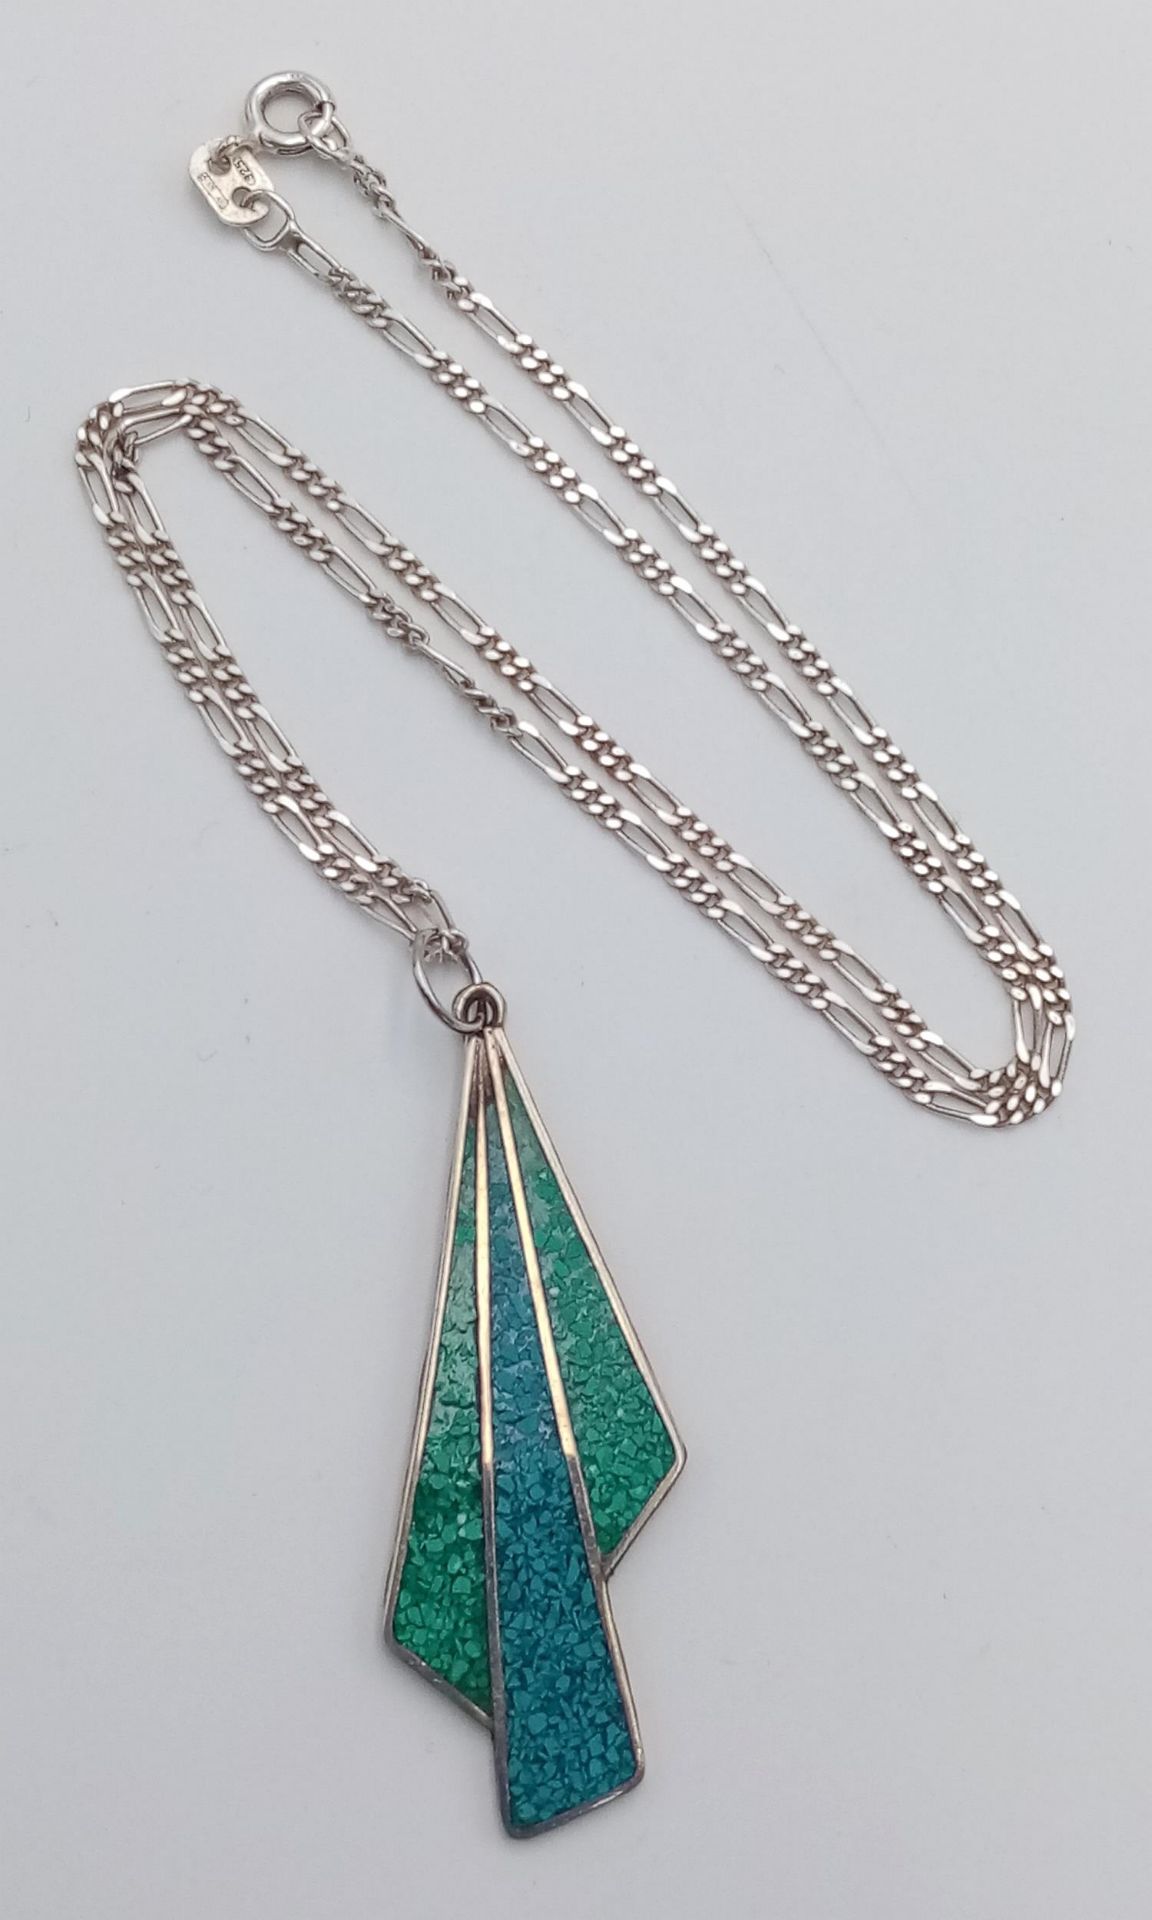 A Vintage Alpaca Turquoise Set Sterling Silver Necklace. 40cm Length. Pendant Measures 5cm Length. - Image 3 of 6